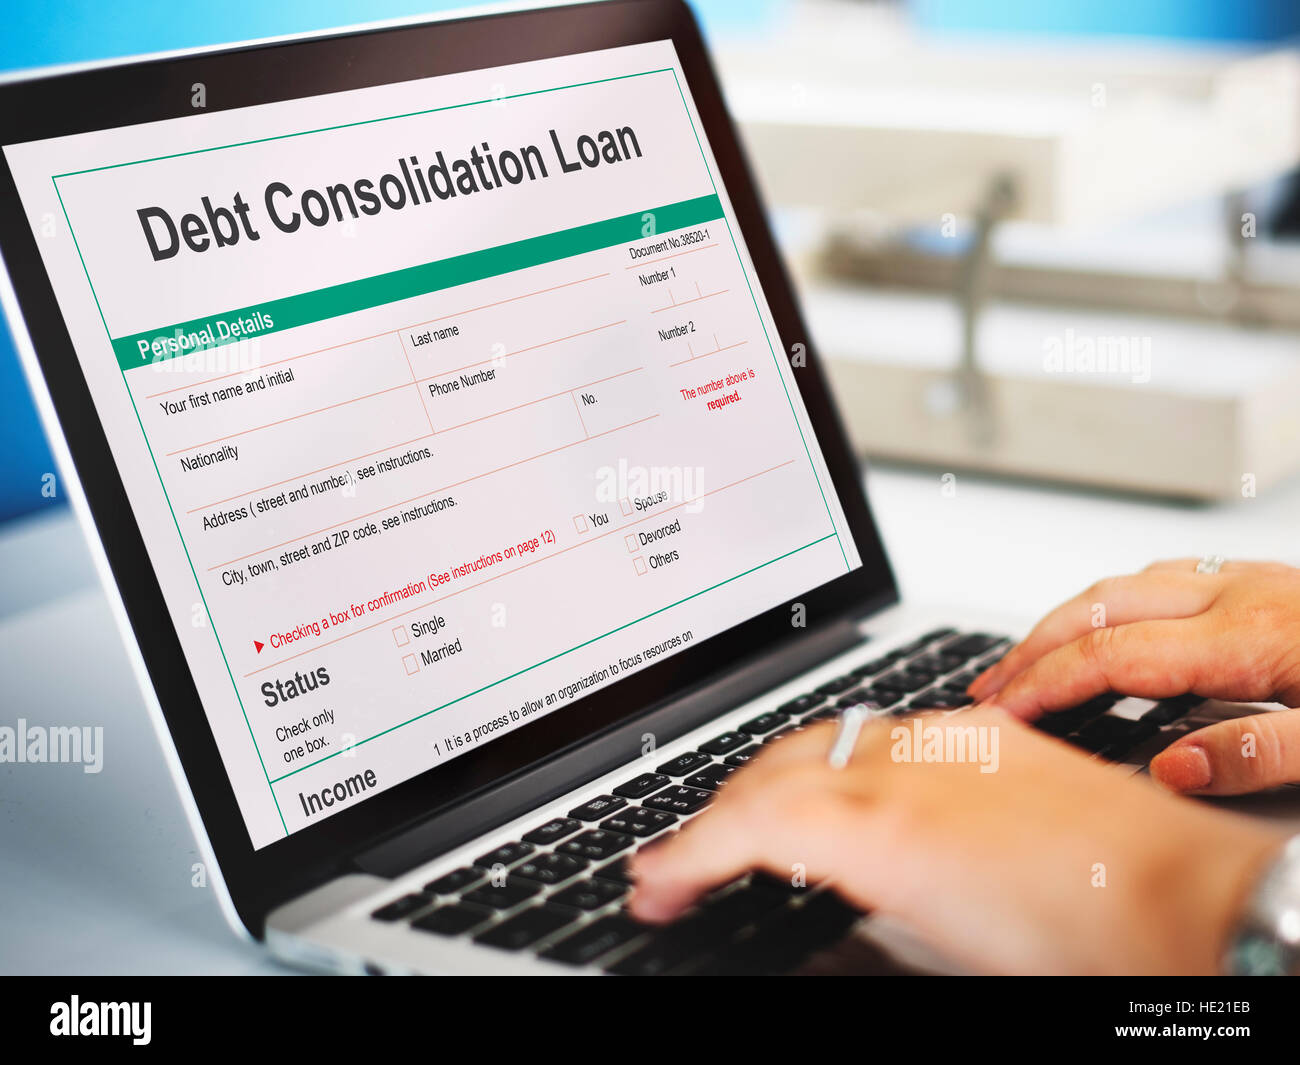 Debt Consolidation Loan Financial Concept Stock Photo